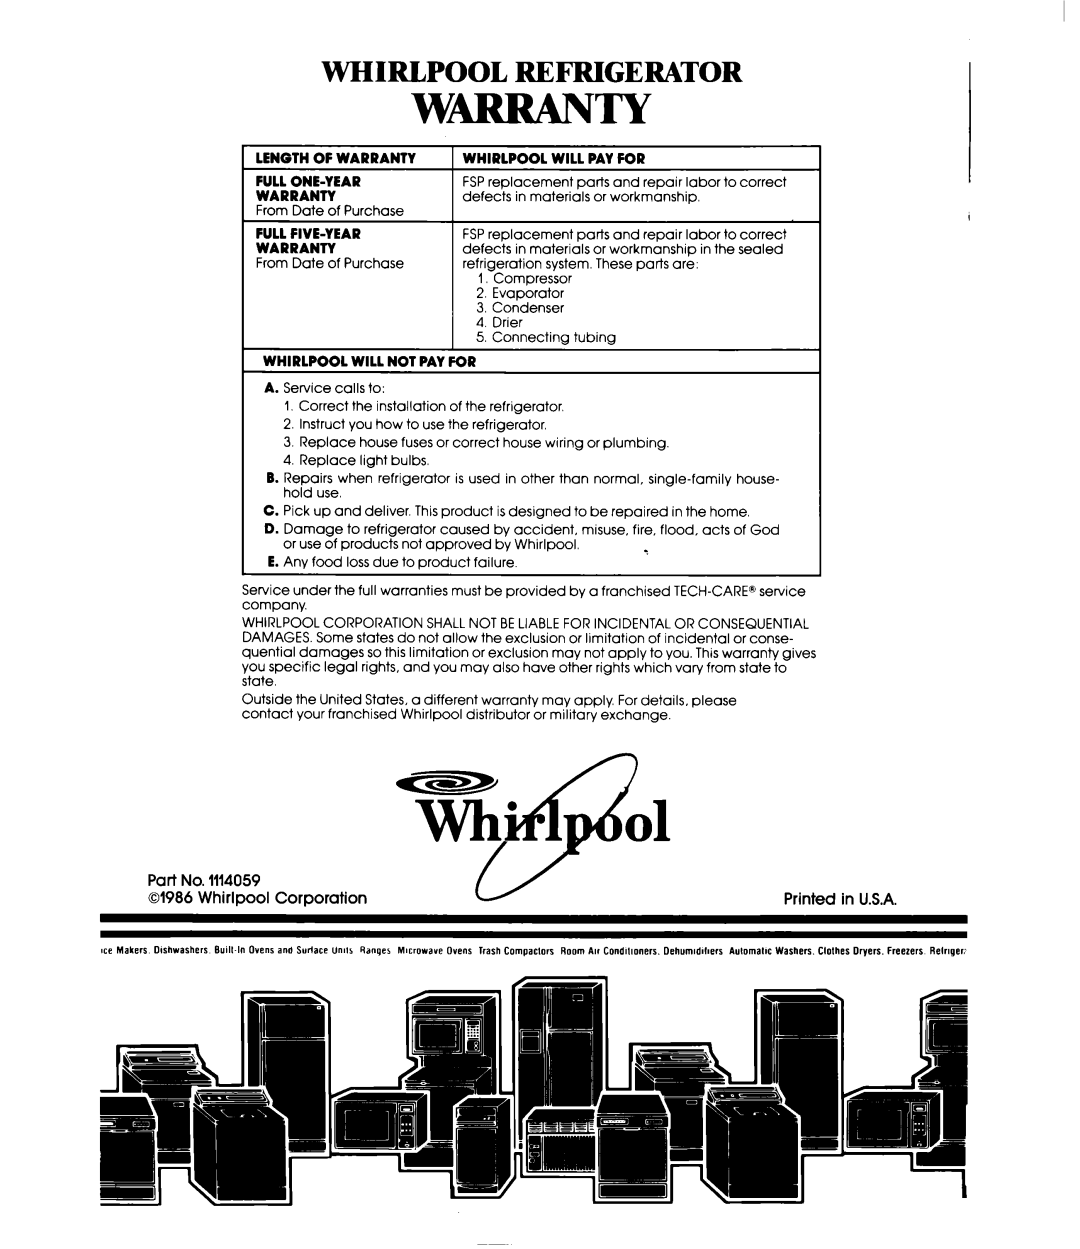 Whirlpool ETl8MK manual W-T-Y, Whirlpool Refrigerator 